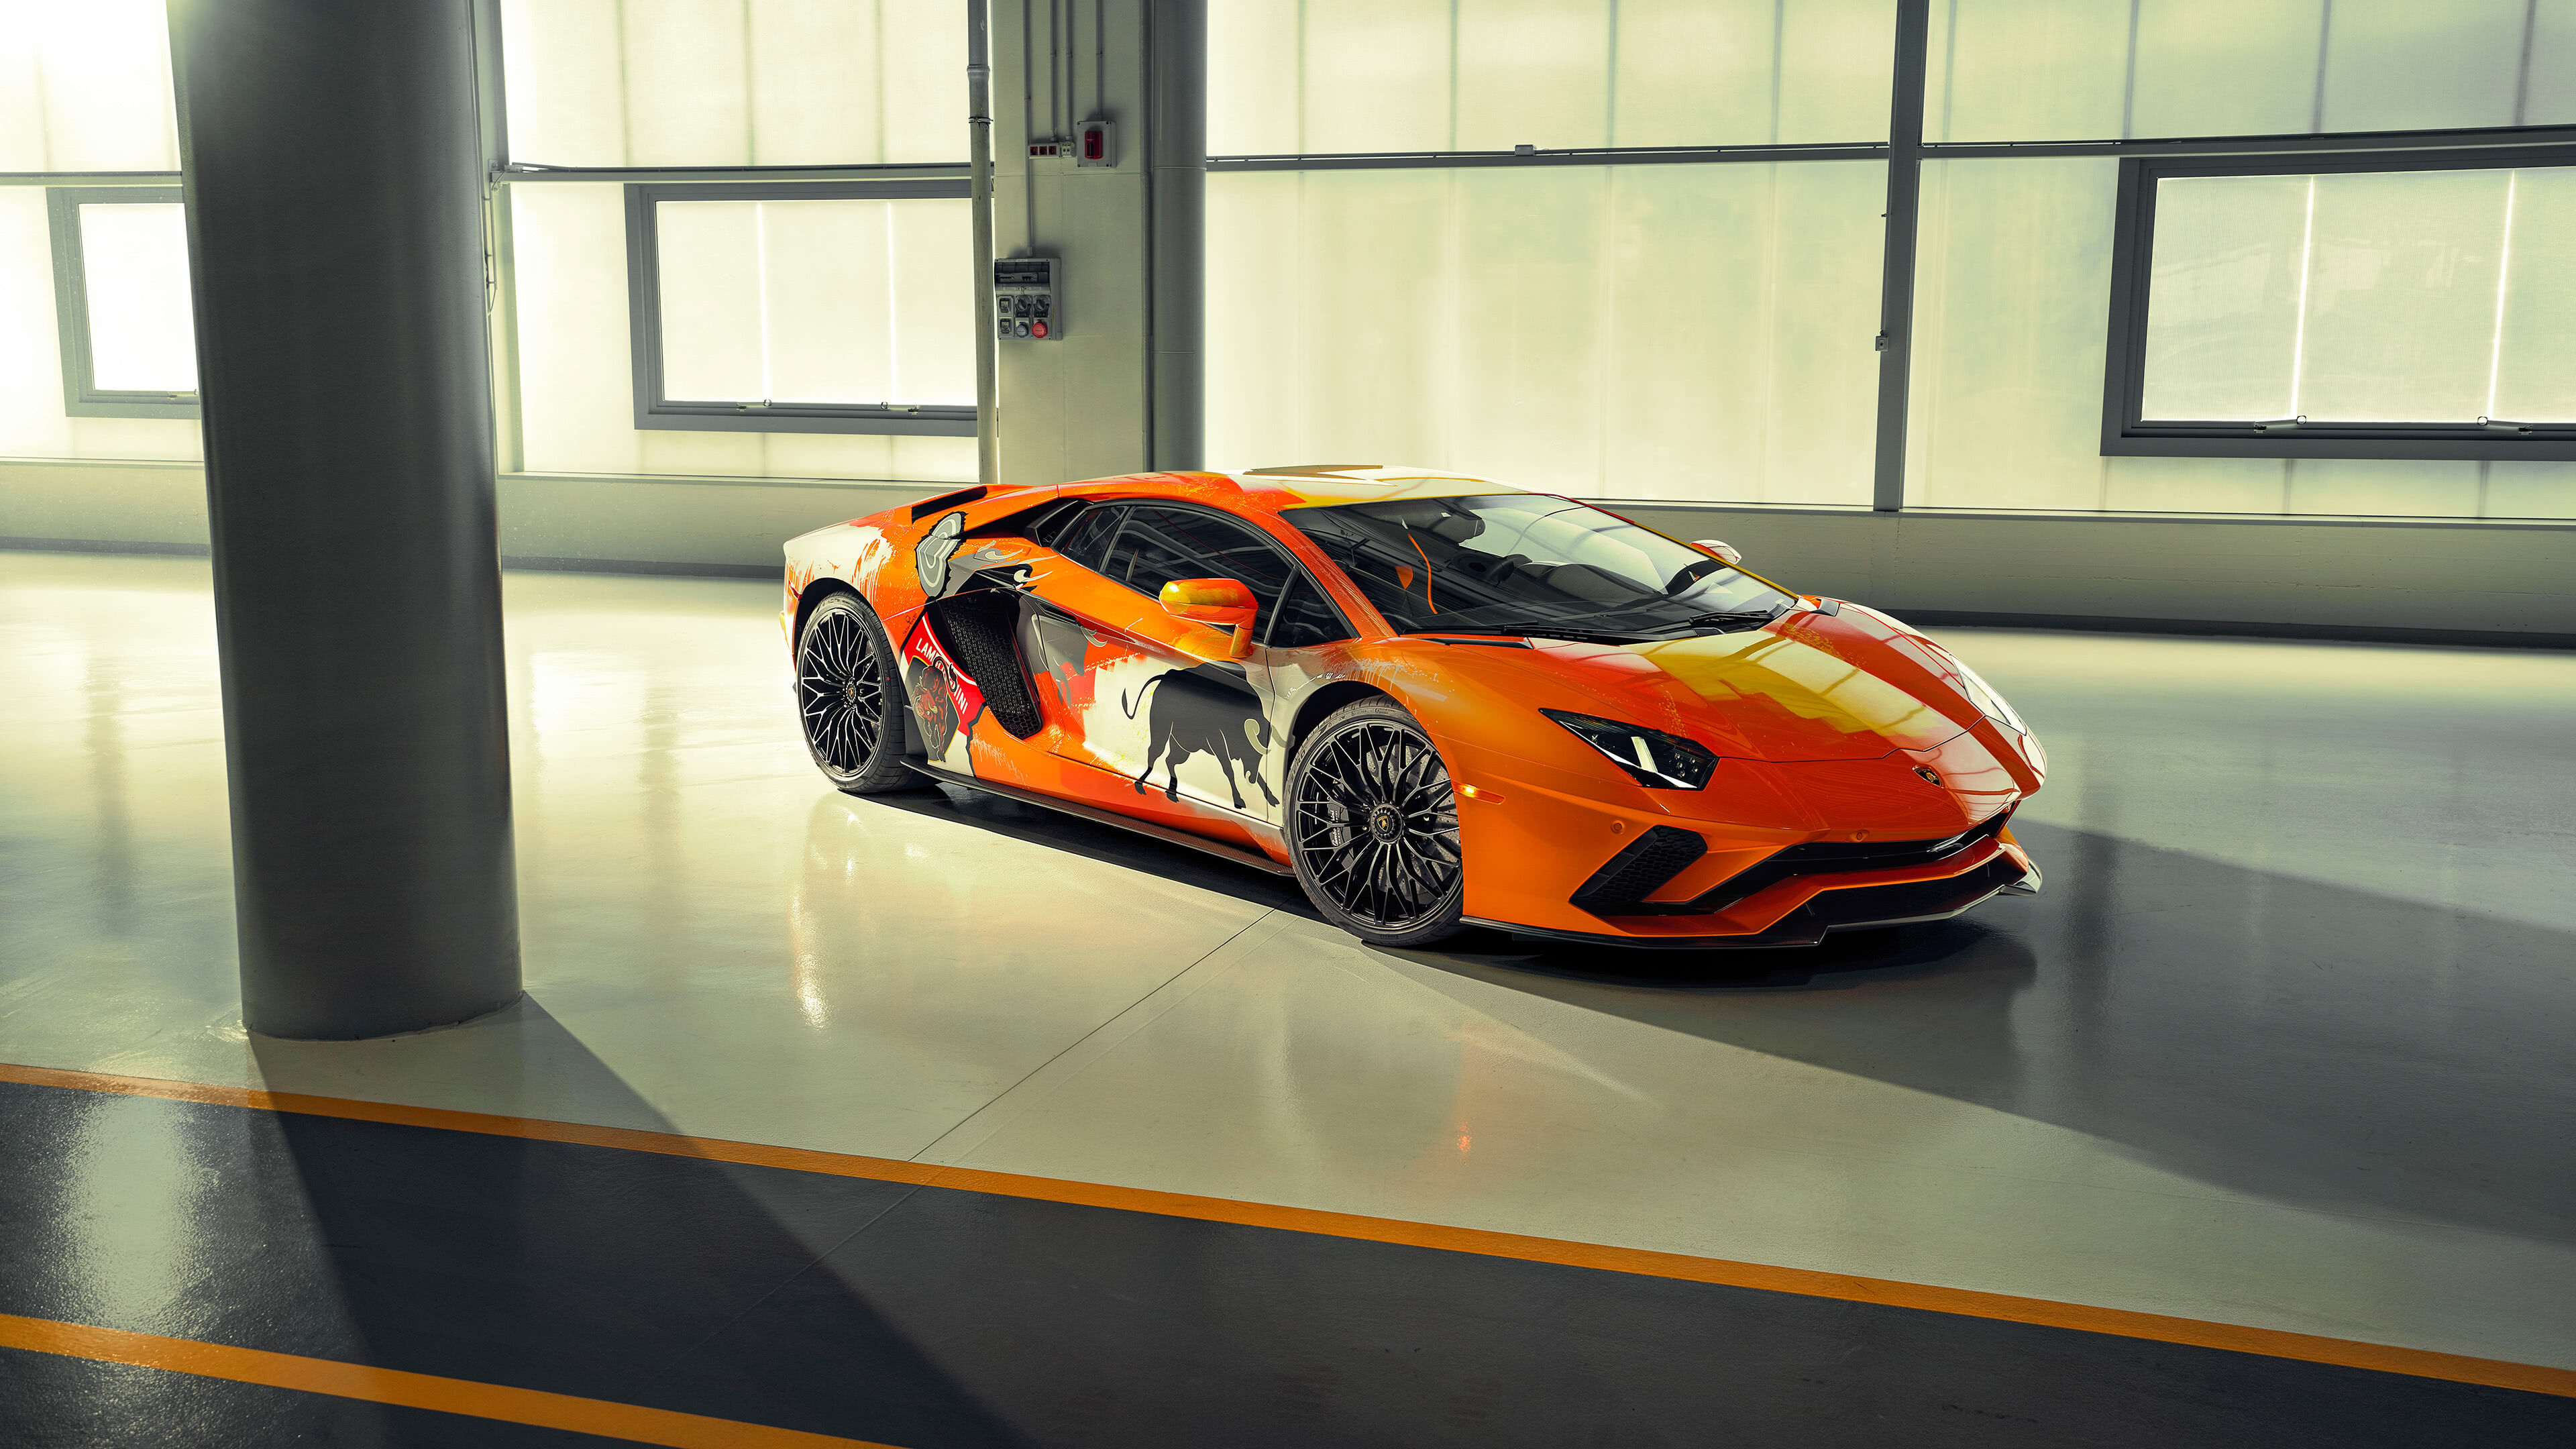 Lamborghini Aventador S Orange UHD 4K Wallpaper | Pixelz